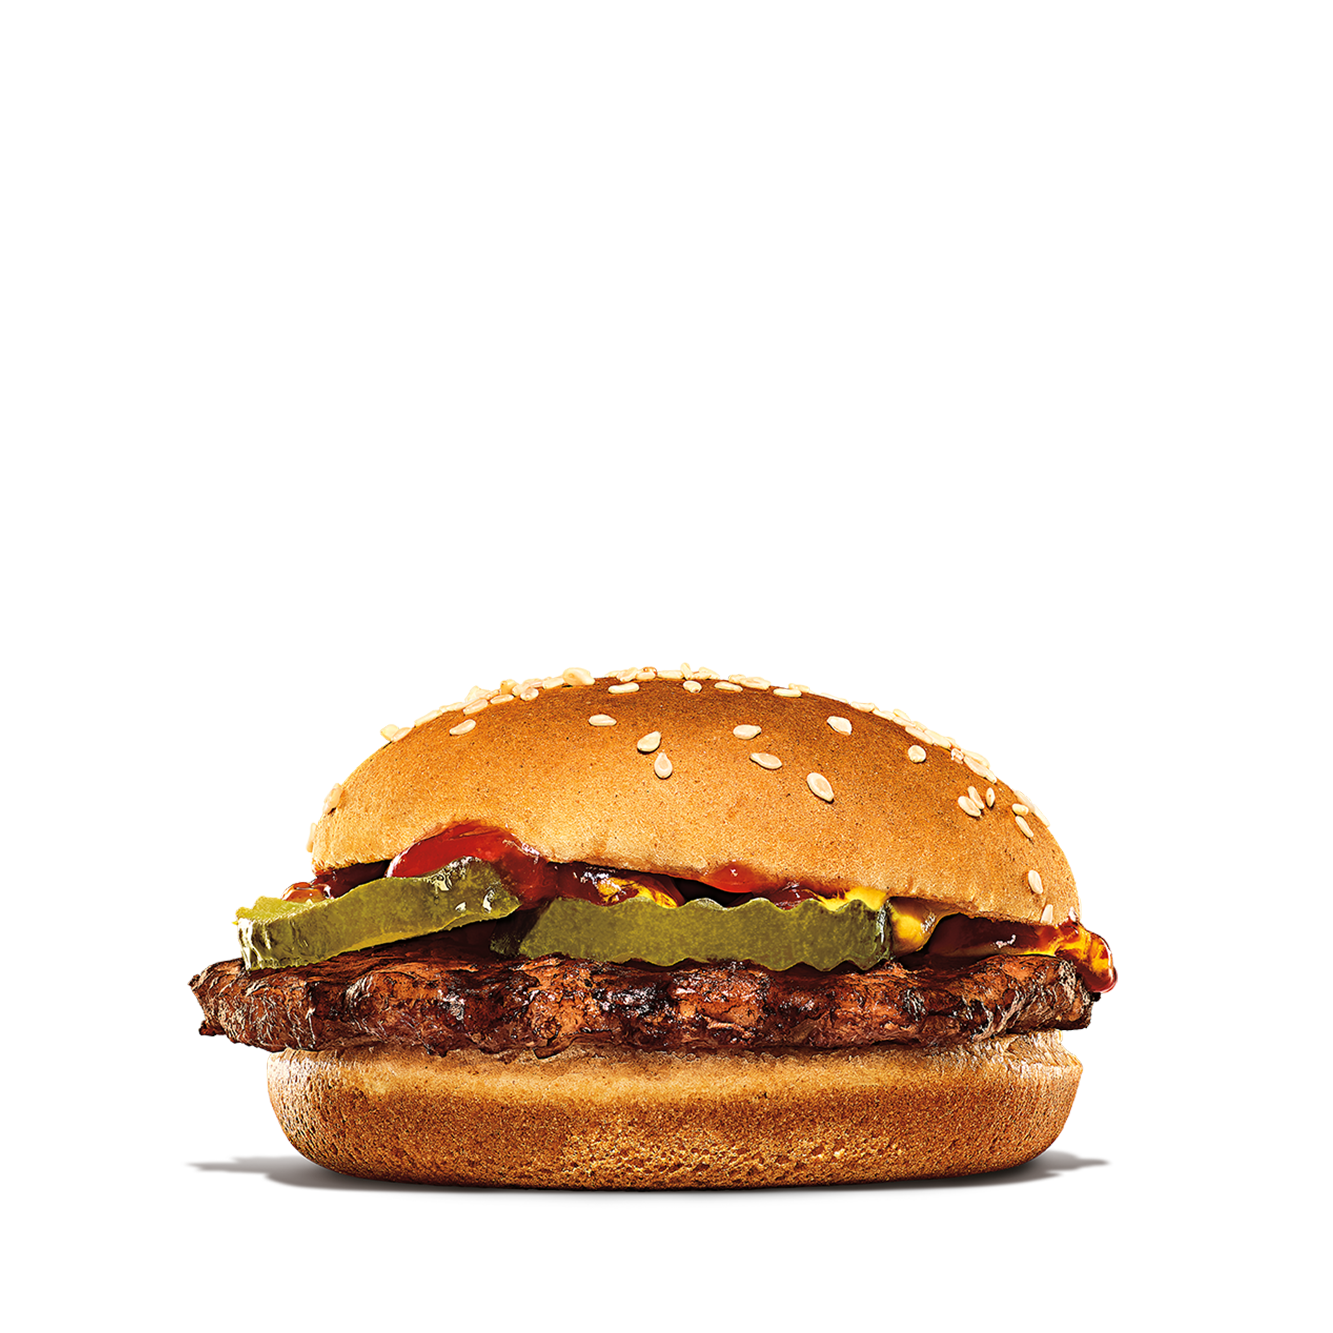 Calories in Burger King Hamburger